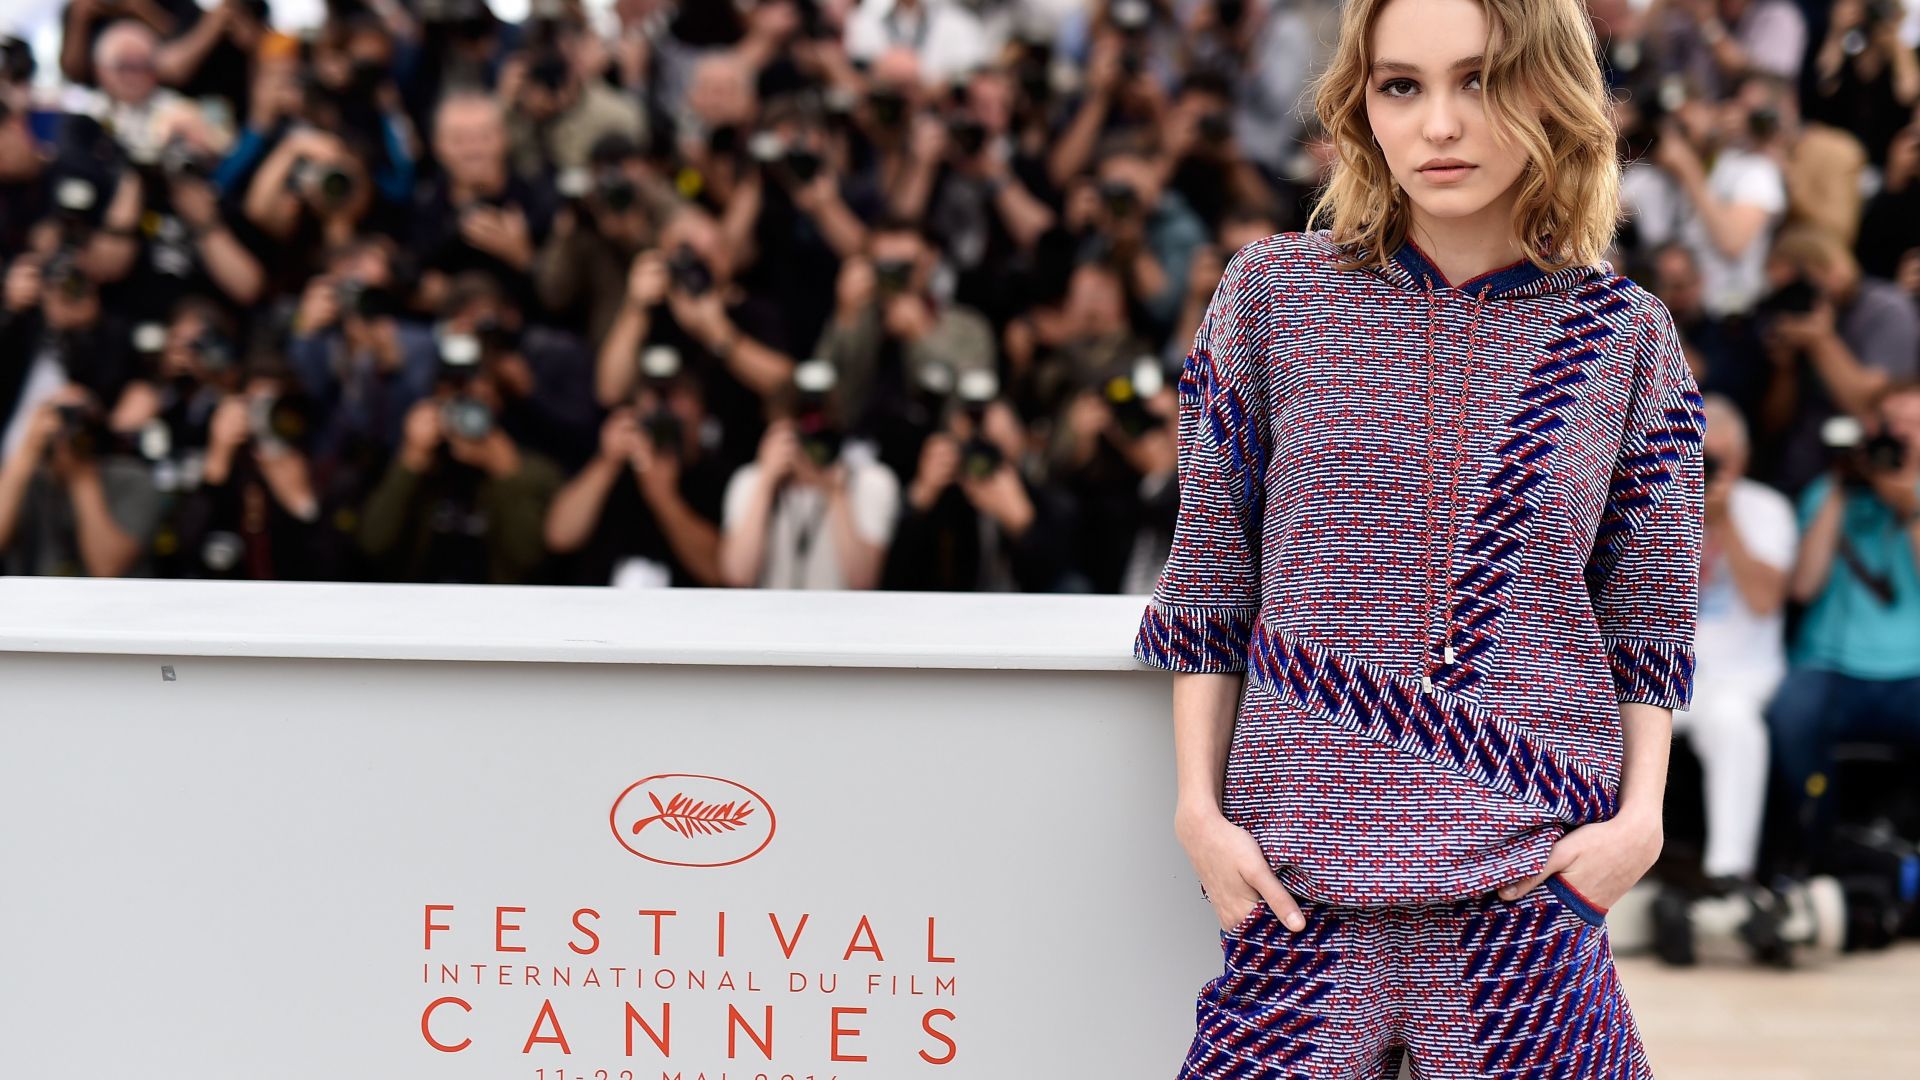 Lily-Rose Depp, Cannes Film Festival 2016 (horizontal)